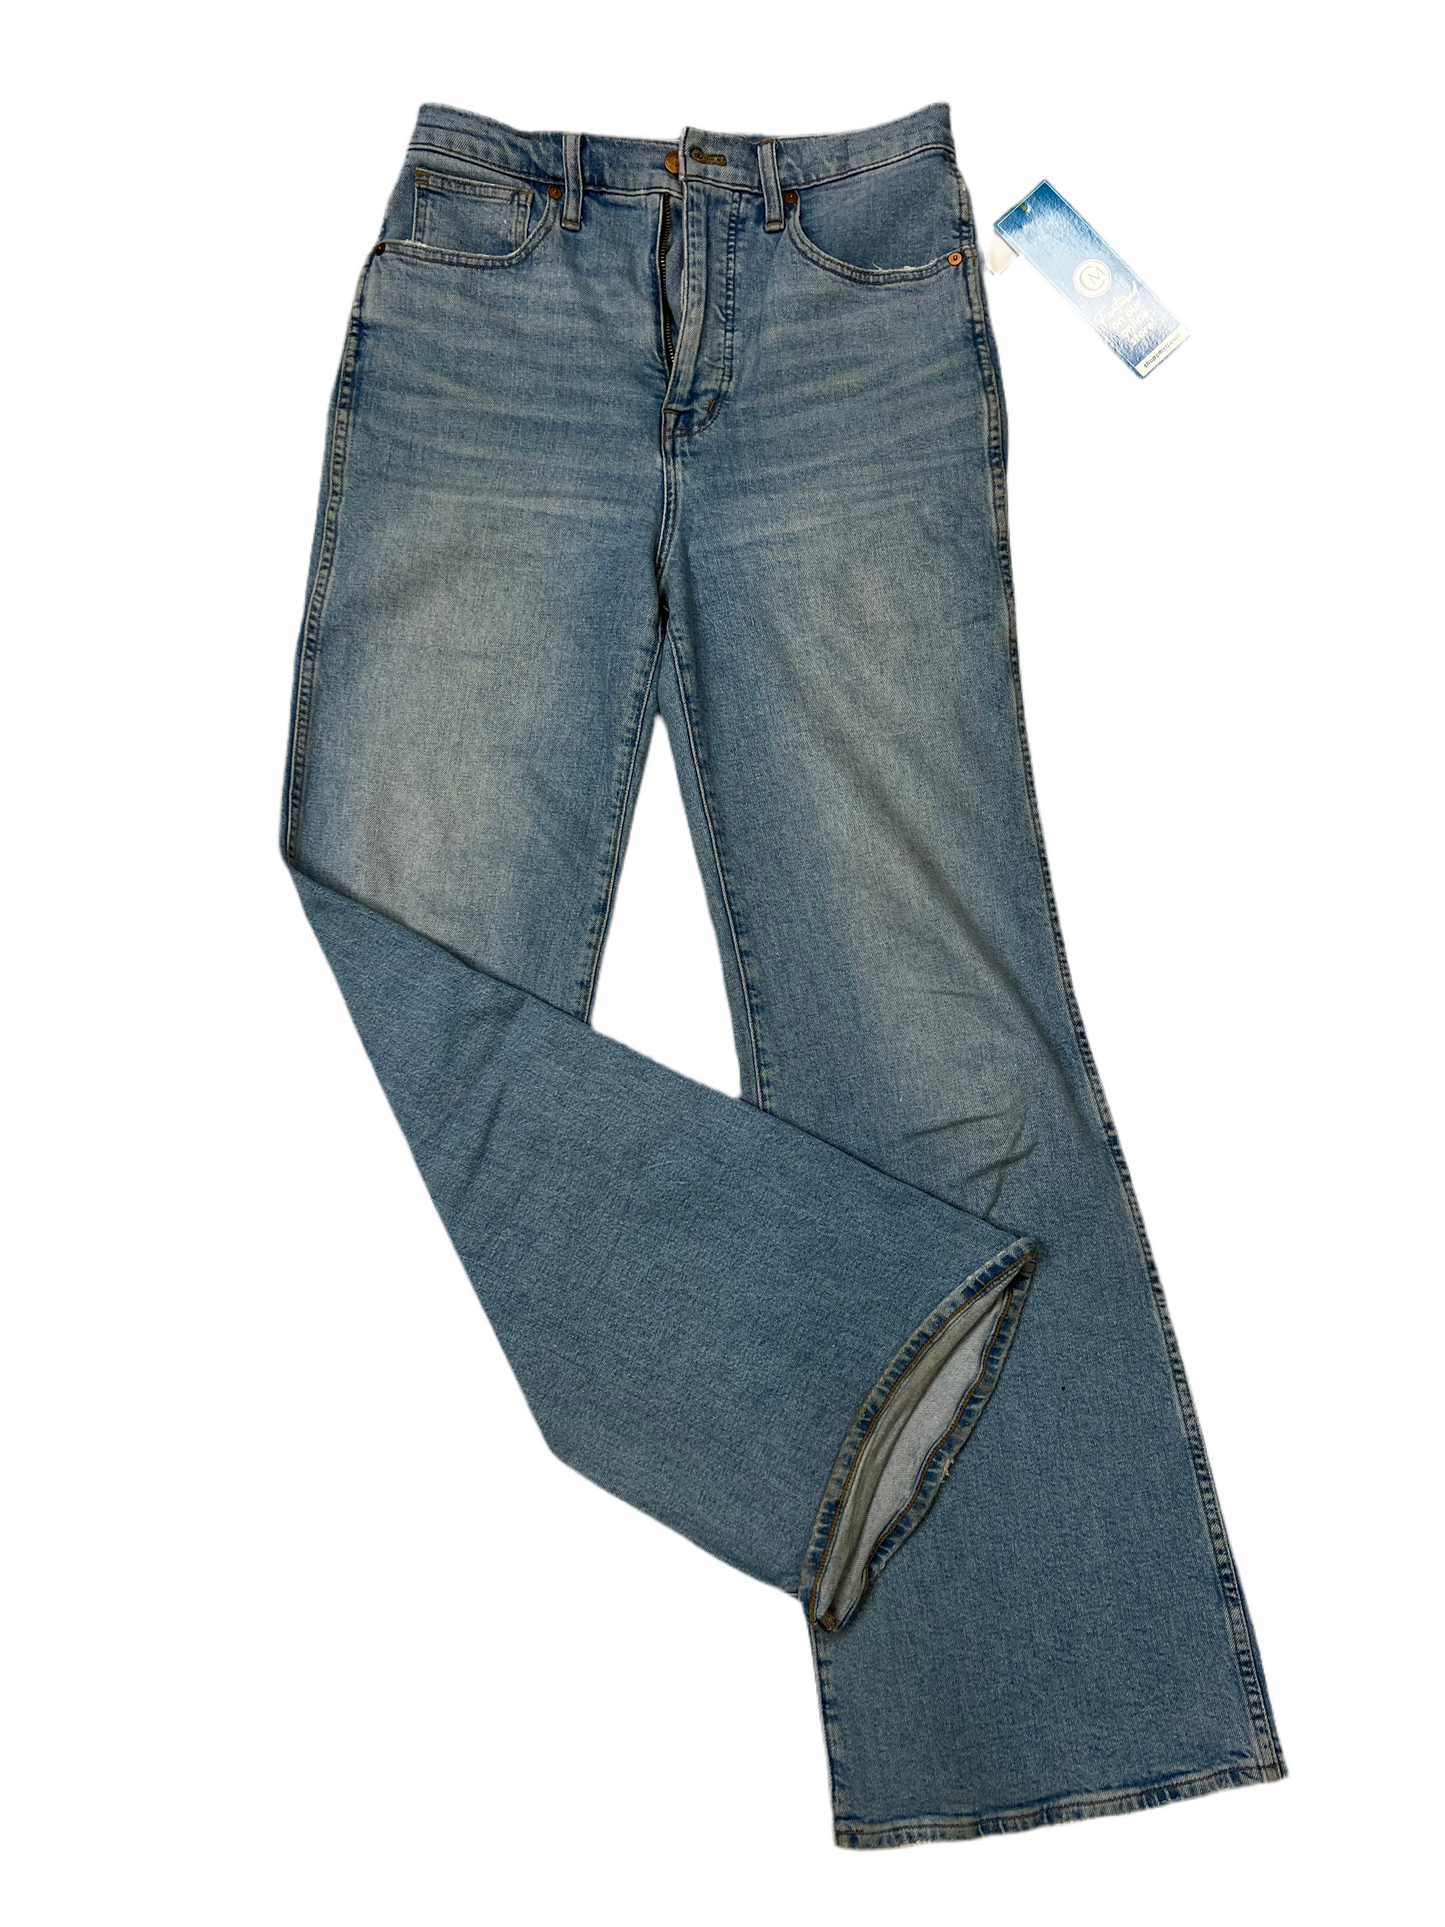 Blue Jeans Designer Madewell, Size 4